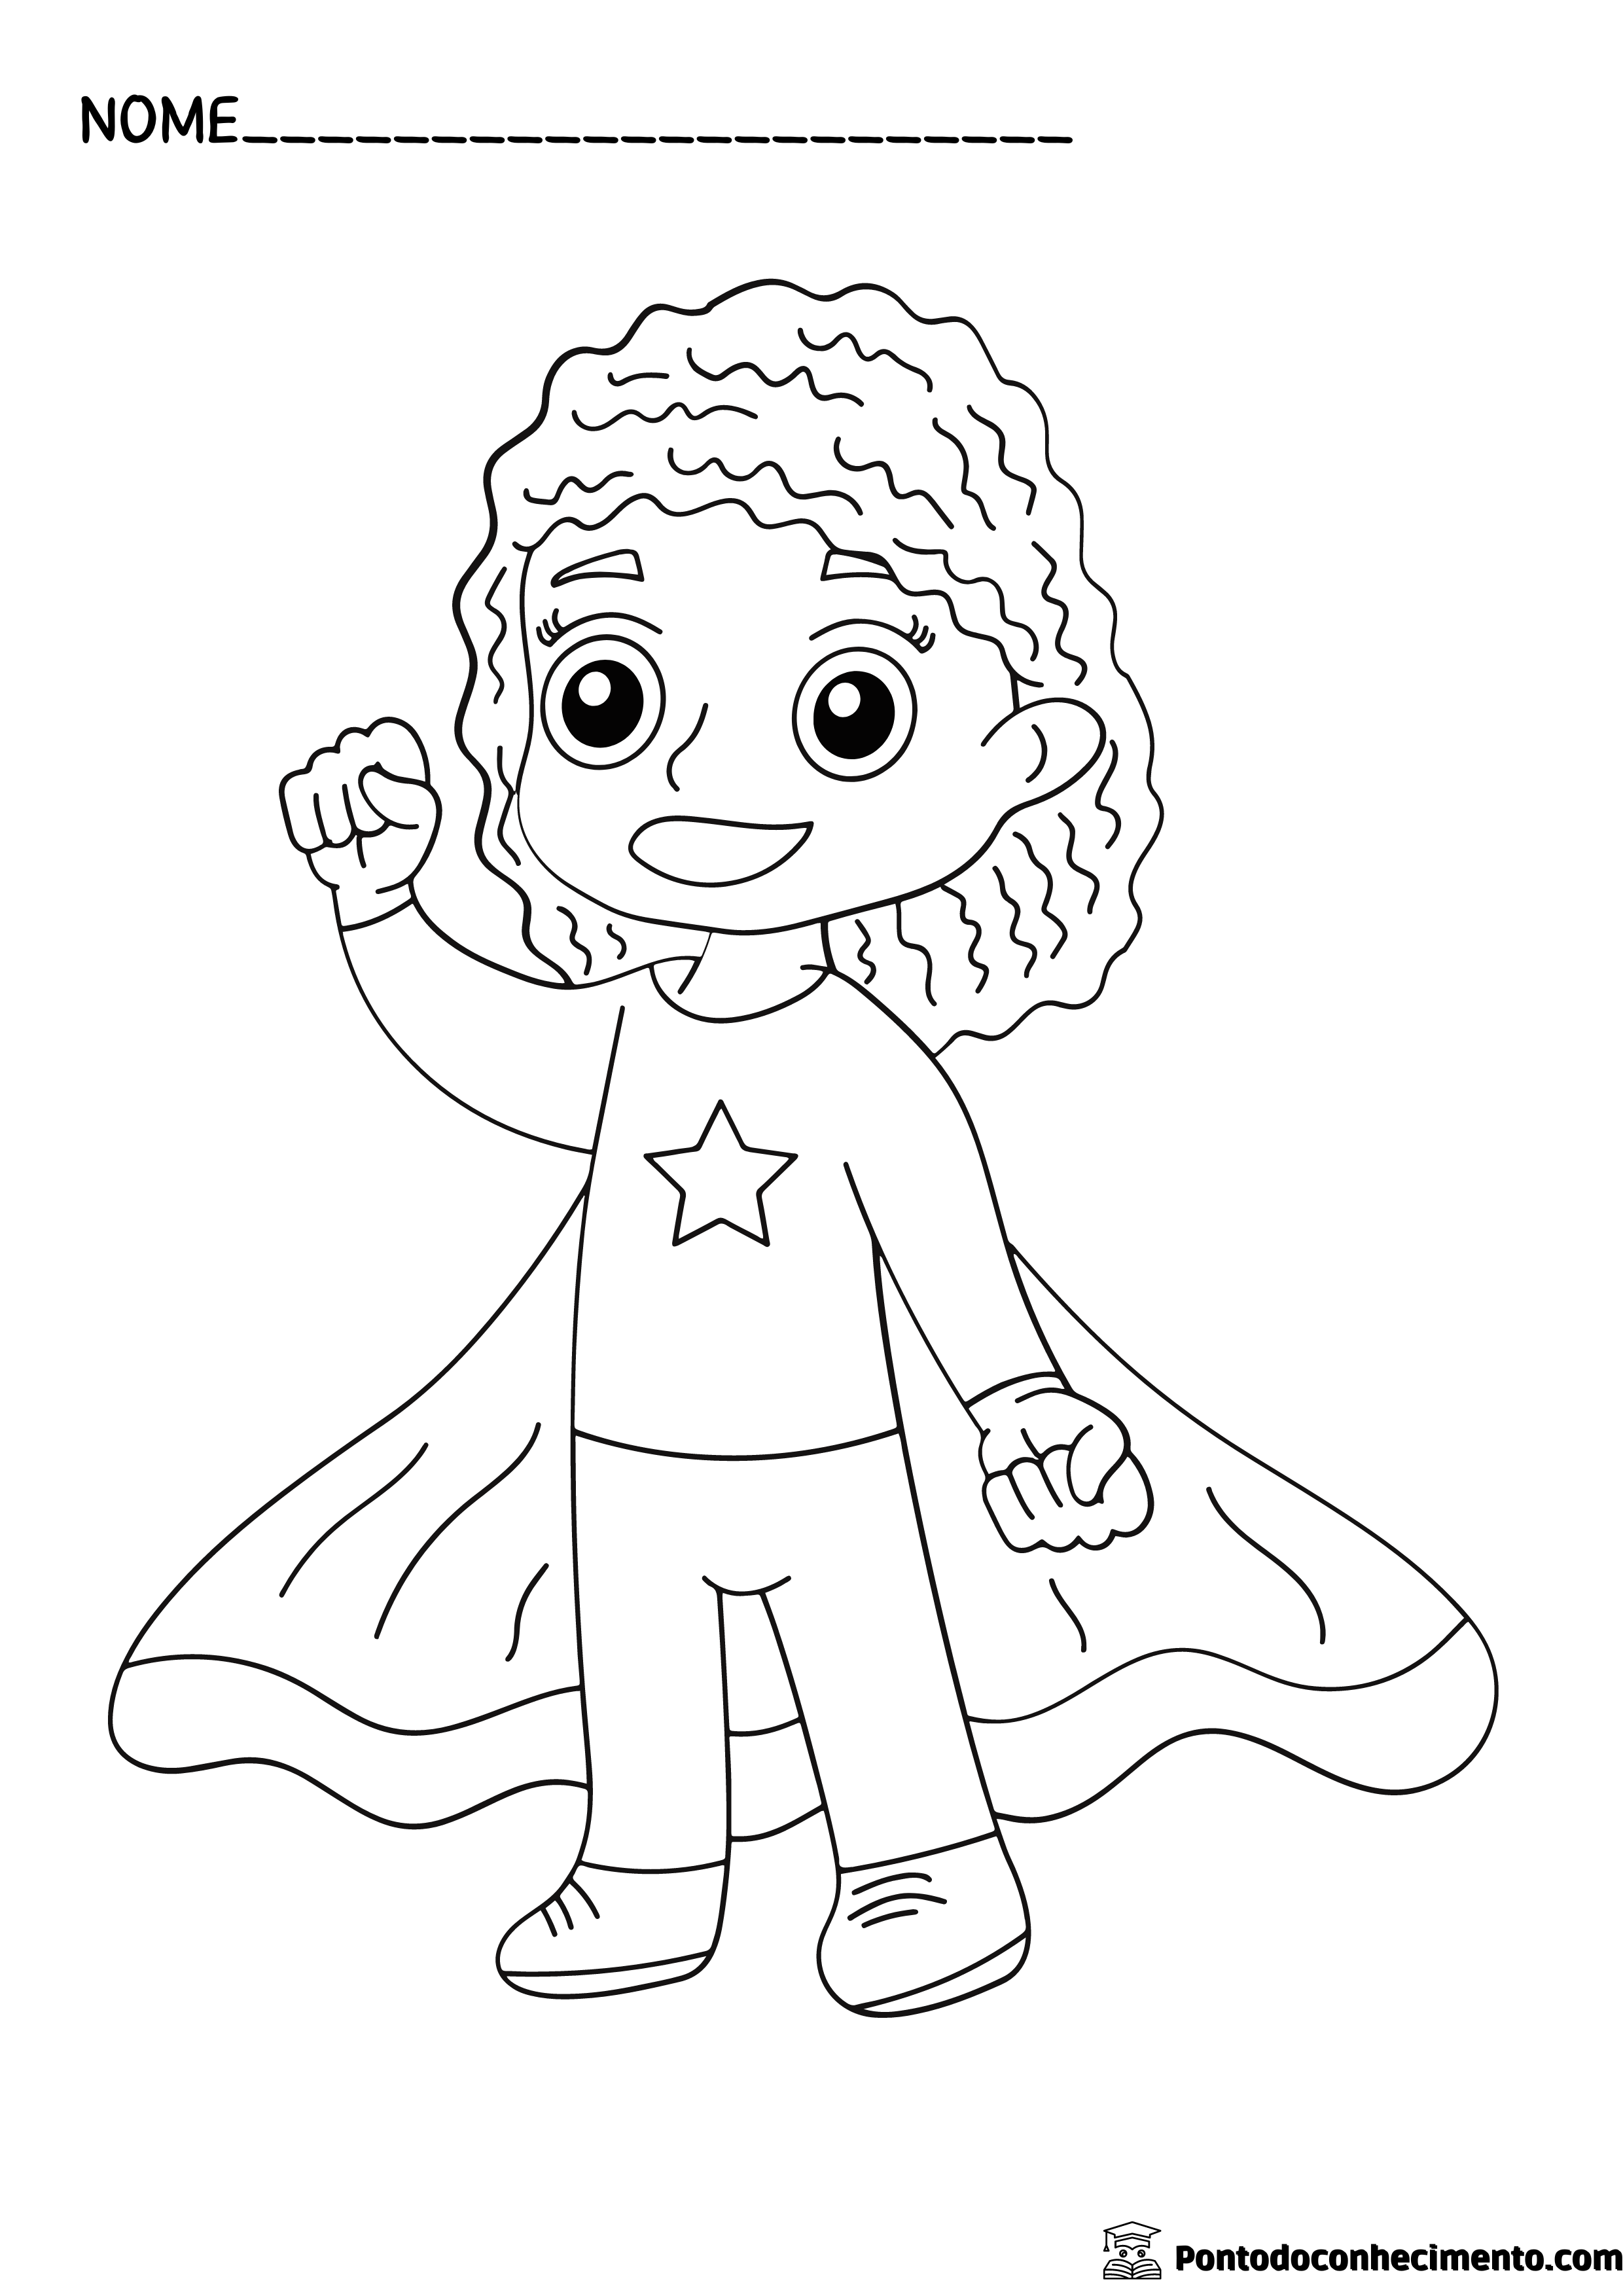 Desenhos infantis para colorir: menina super herói